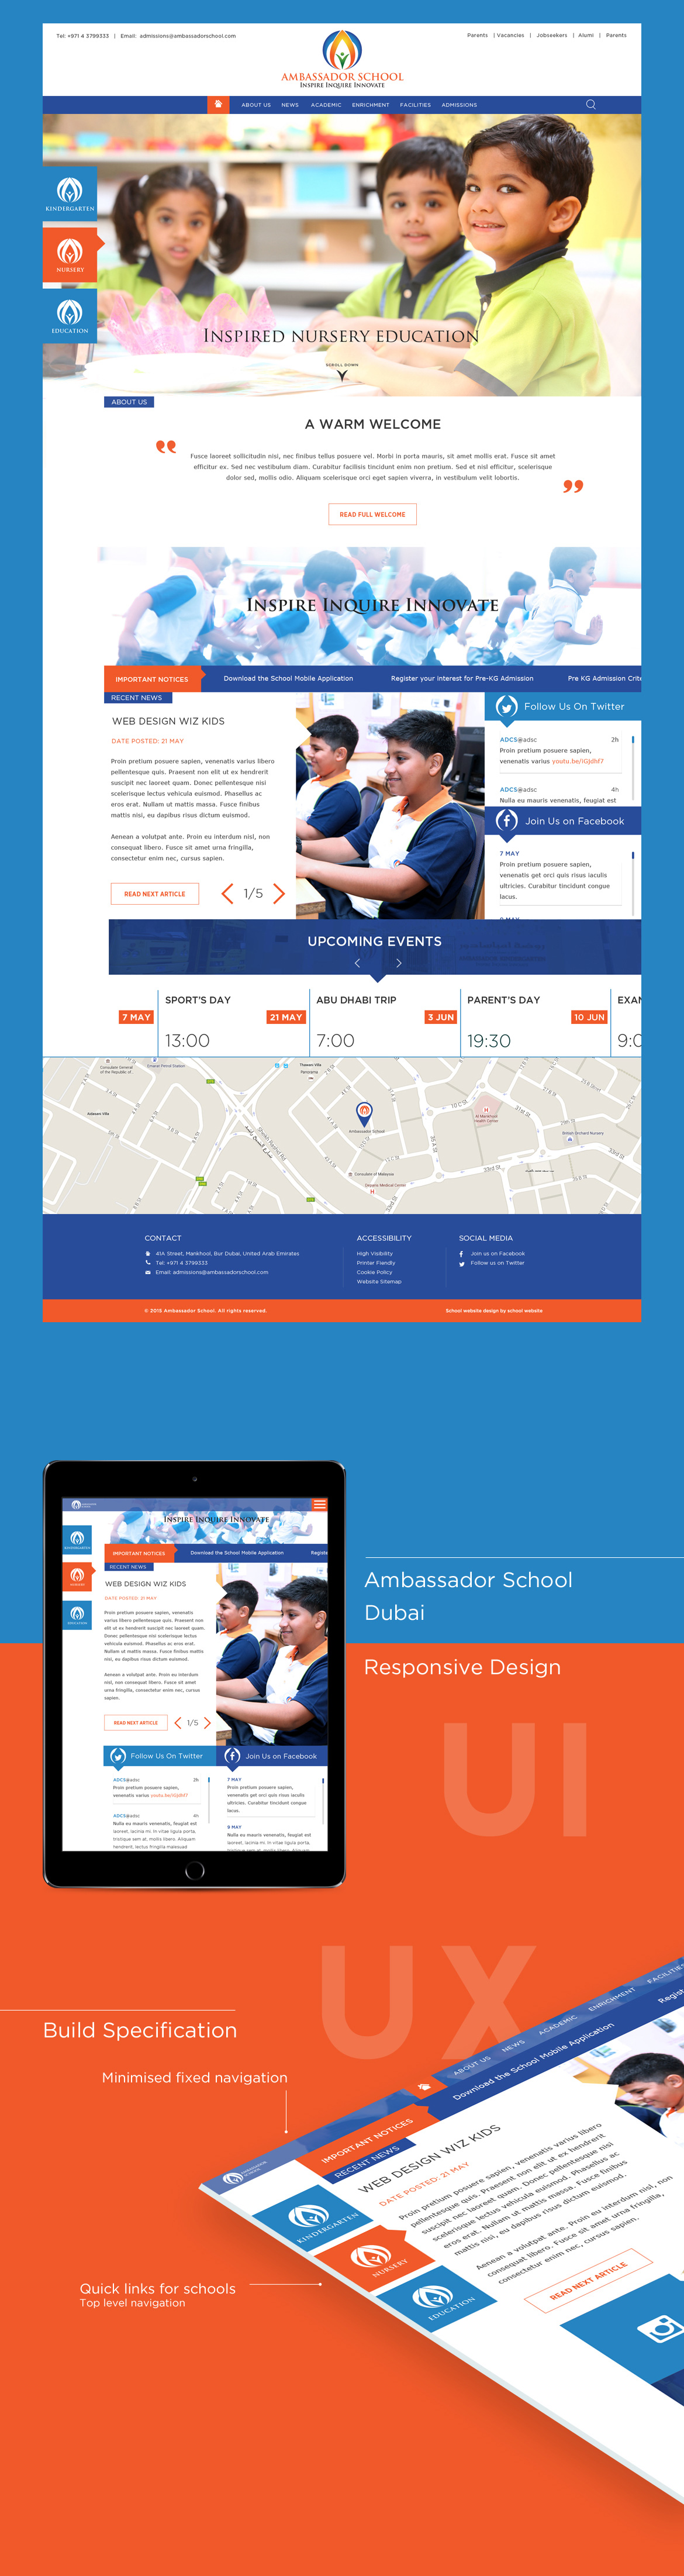 School website by Quade Murrell